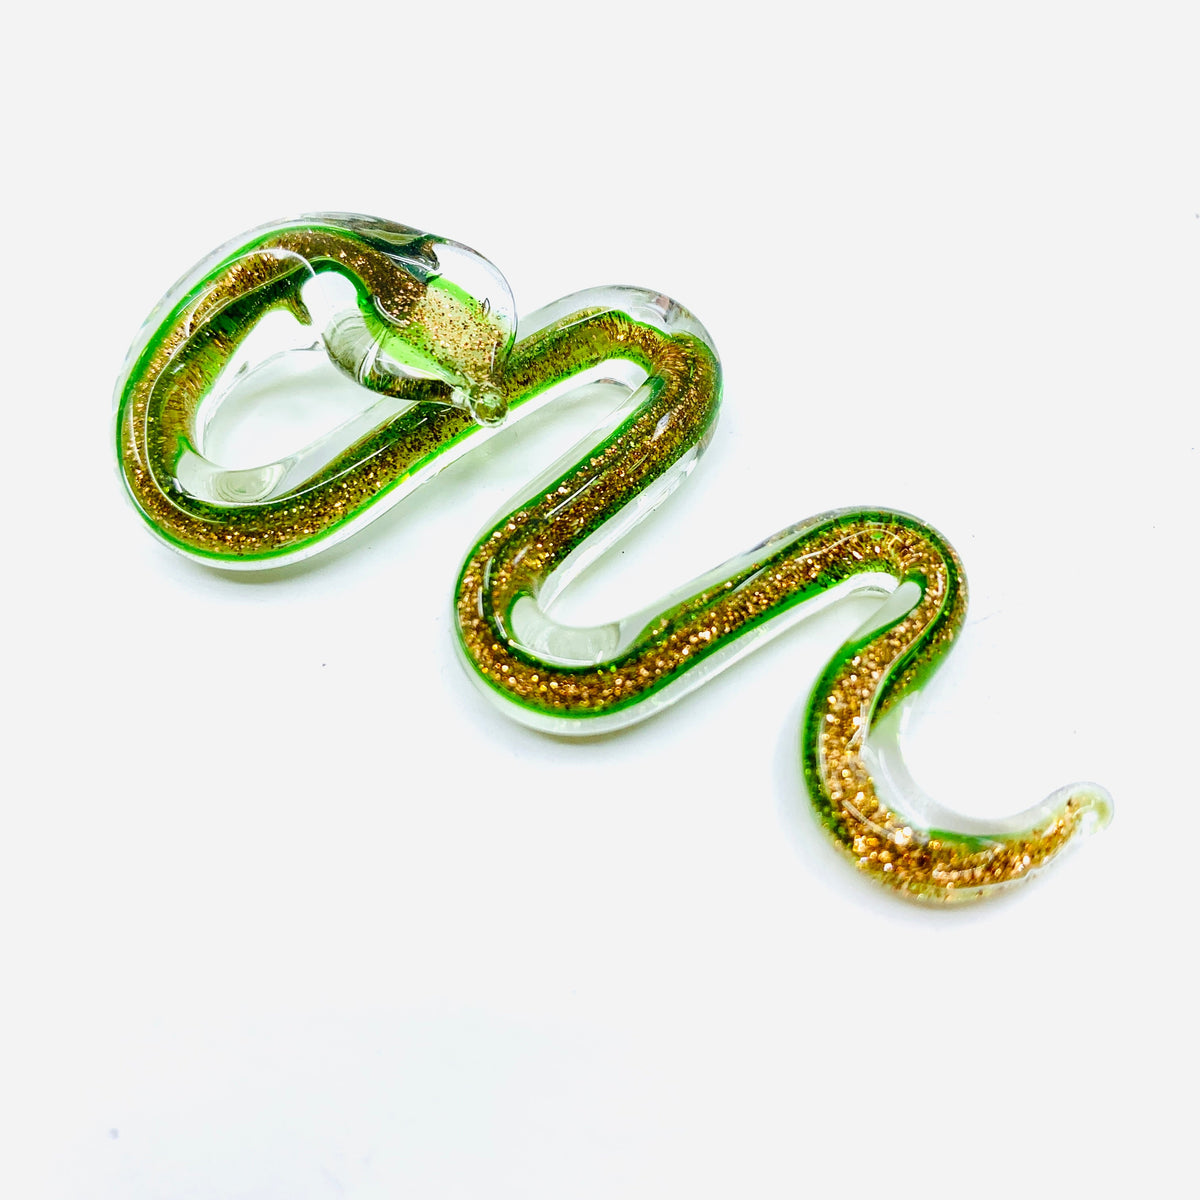 Glitter Snake Miniature - Green and Gold 